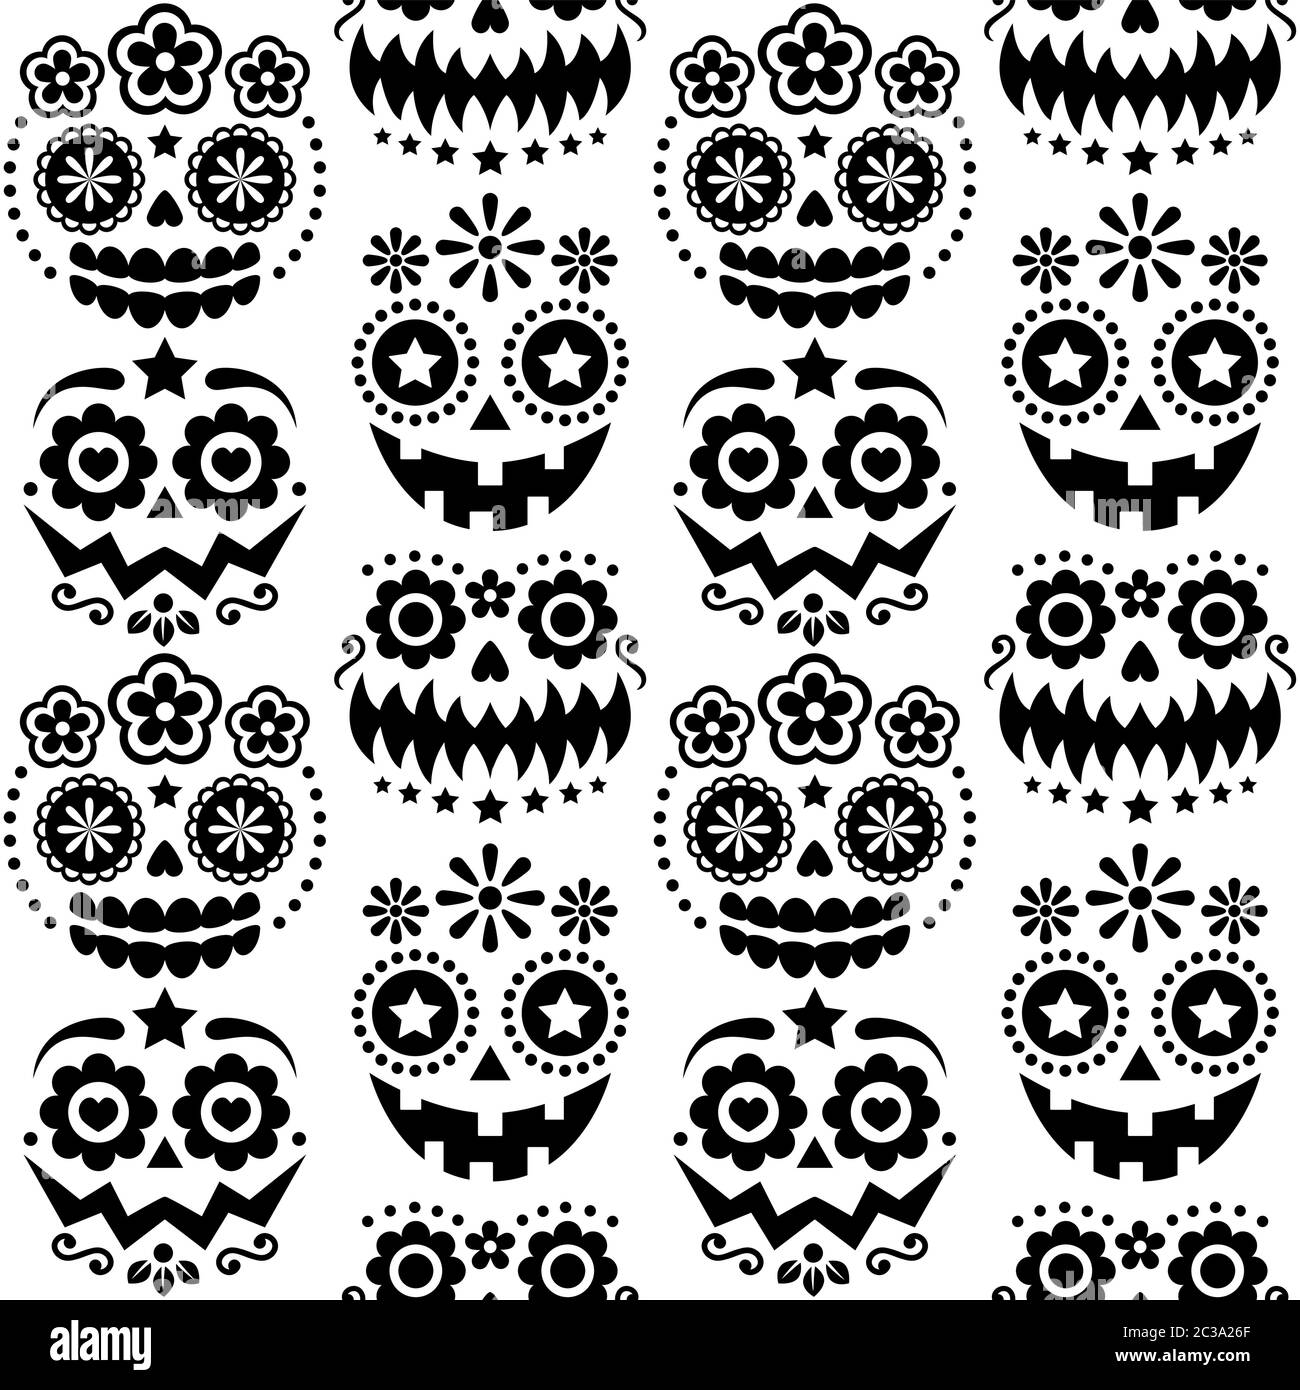 Halloween and Dia de los Muertos skulls and pumpkin faces vector seamless pattern - Mexican sugar skull style texile design Stock Vector